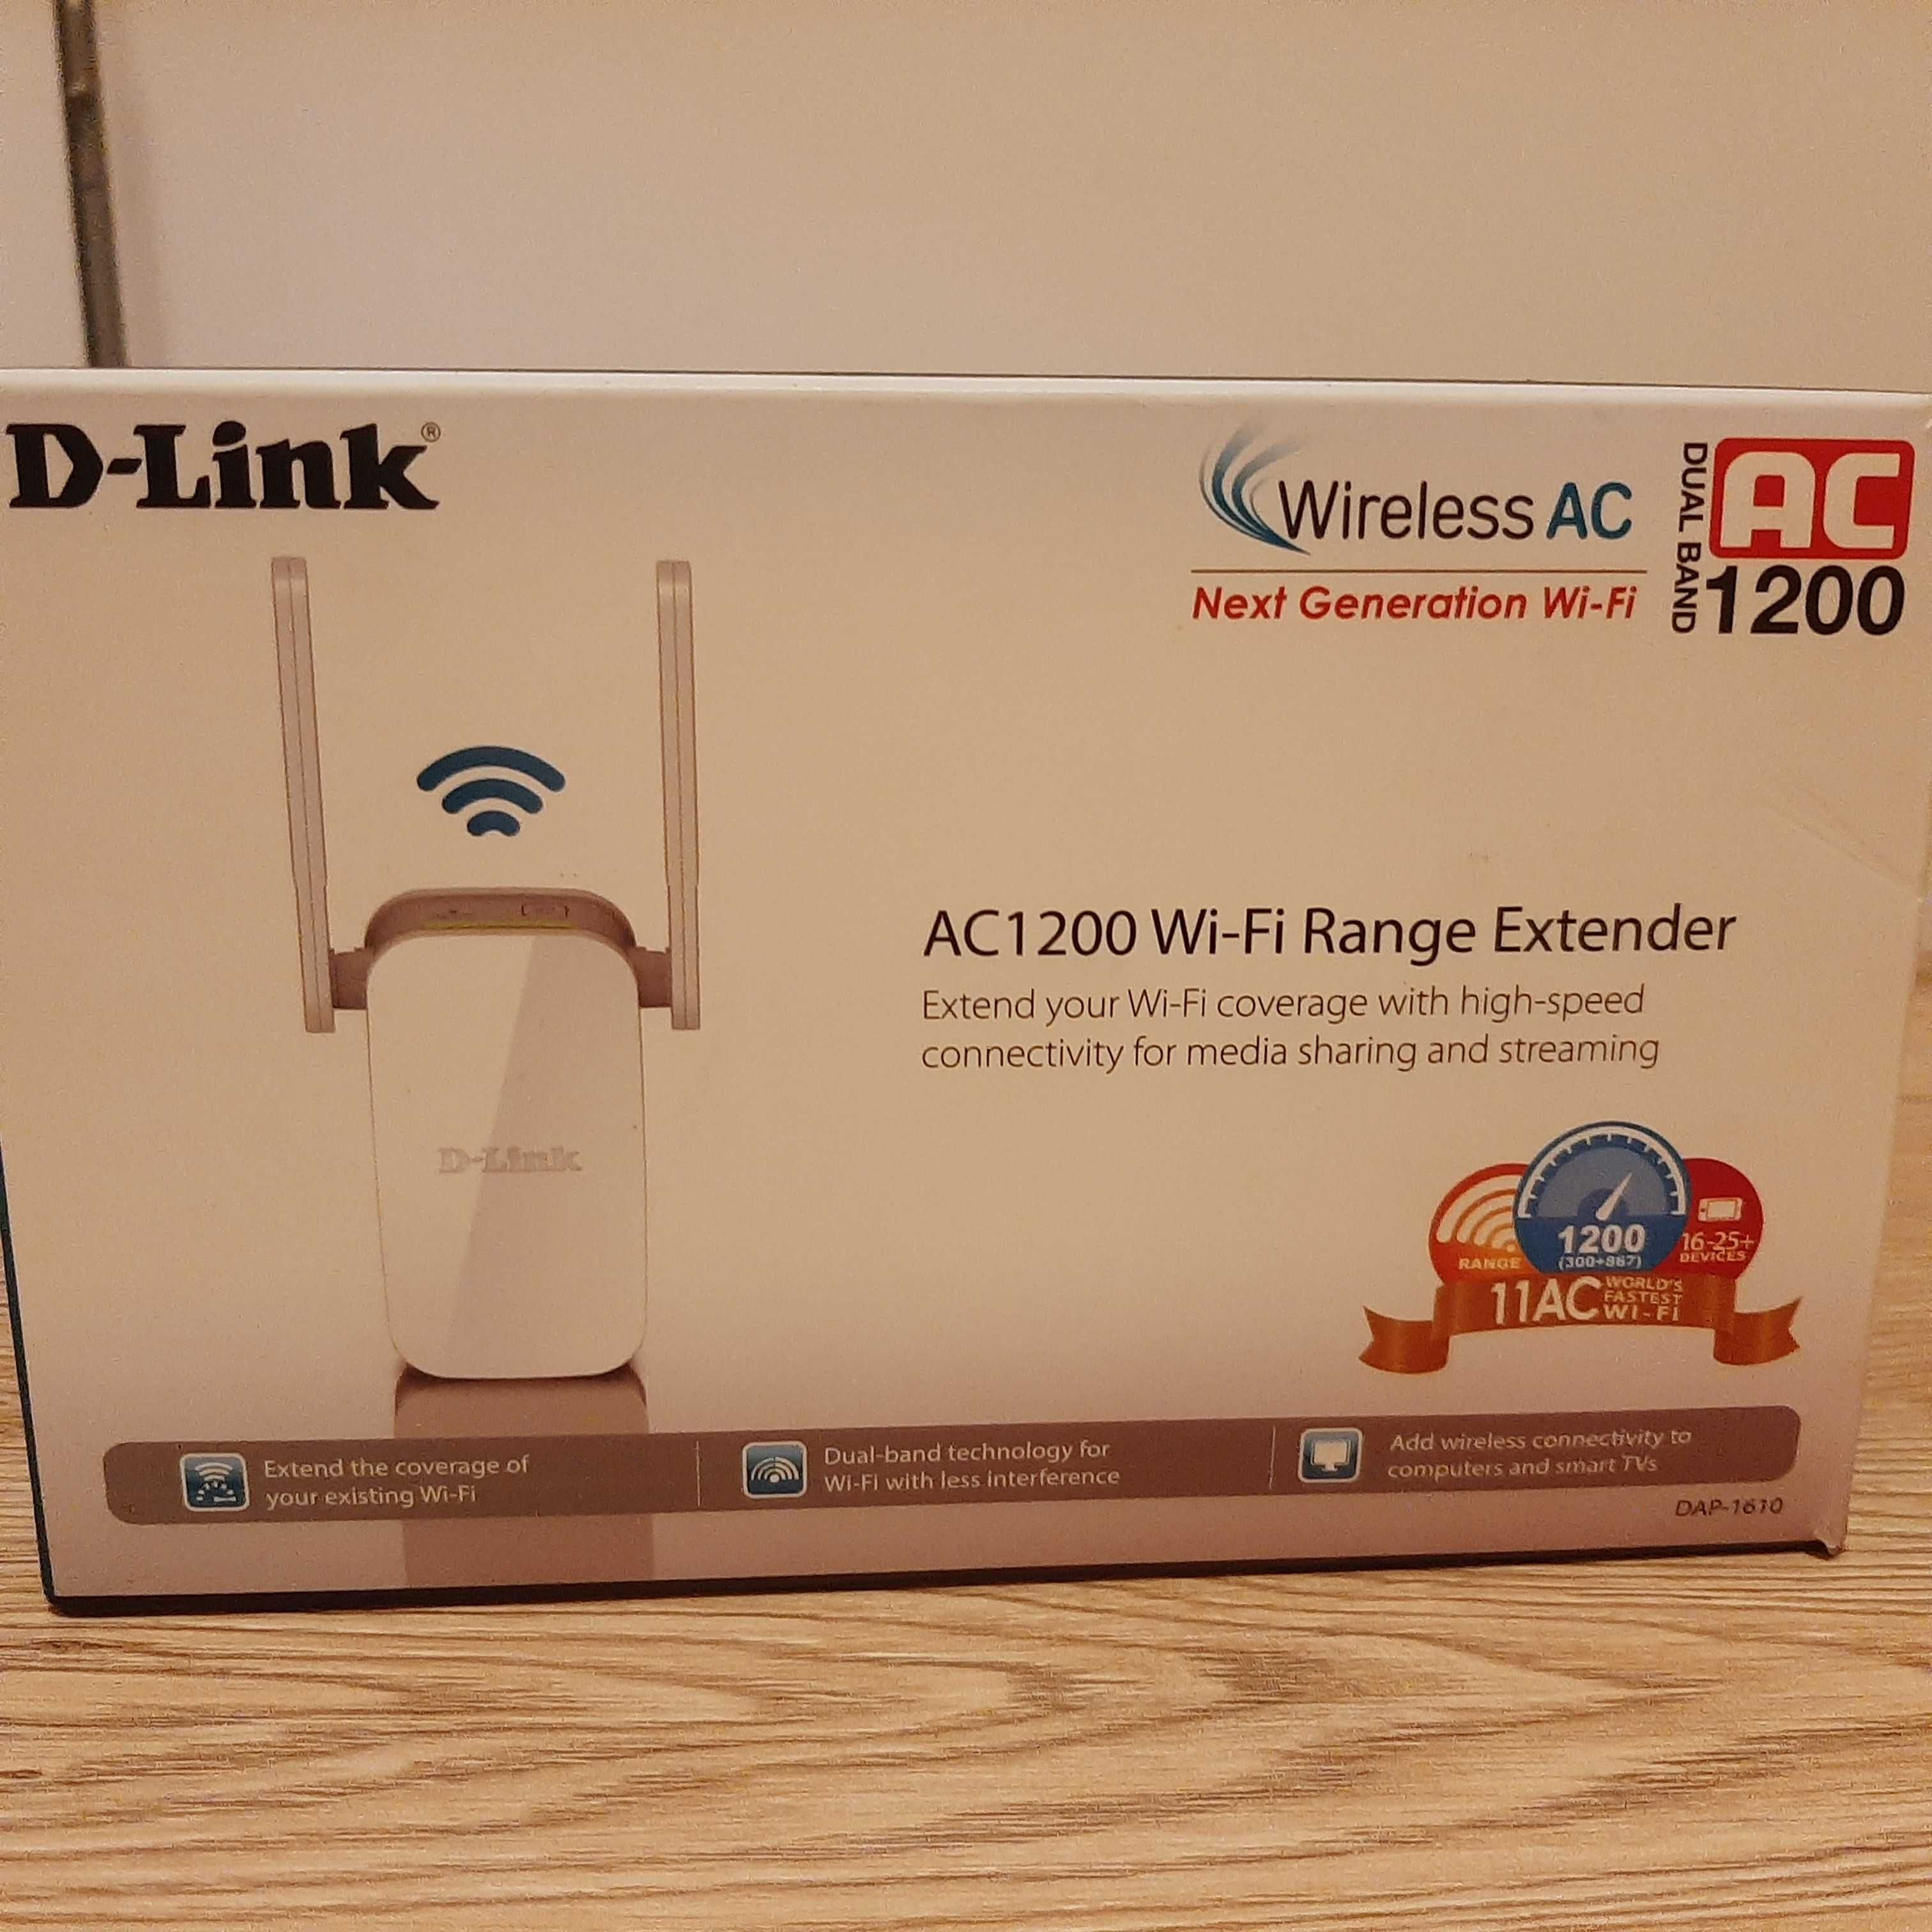 Wireless AC 1200- D-Link